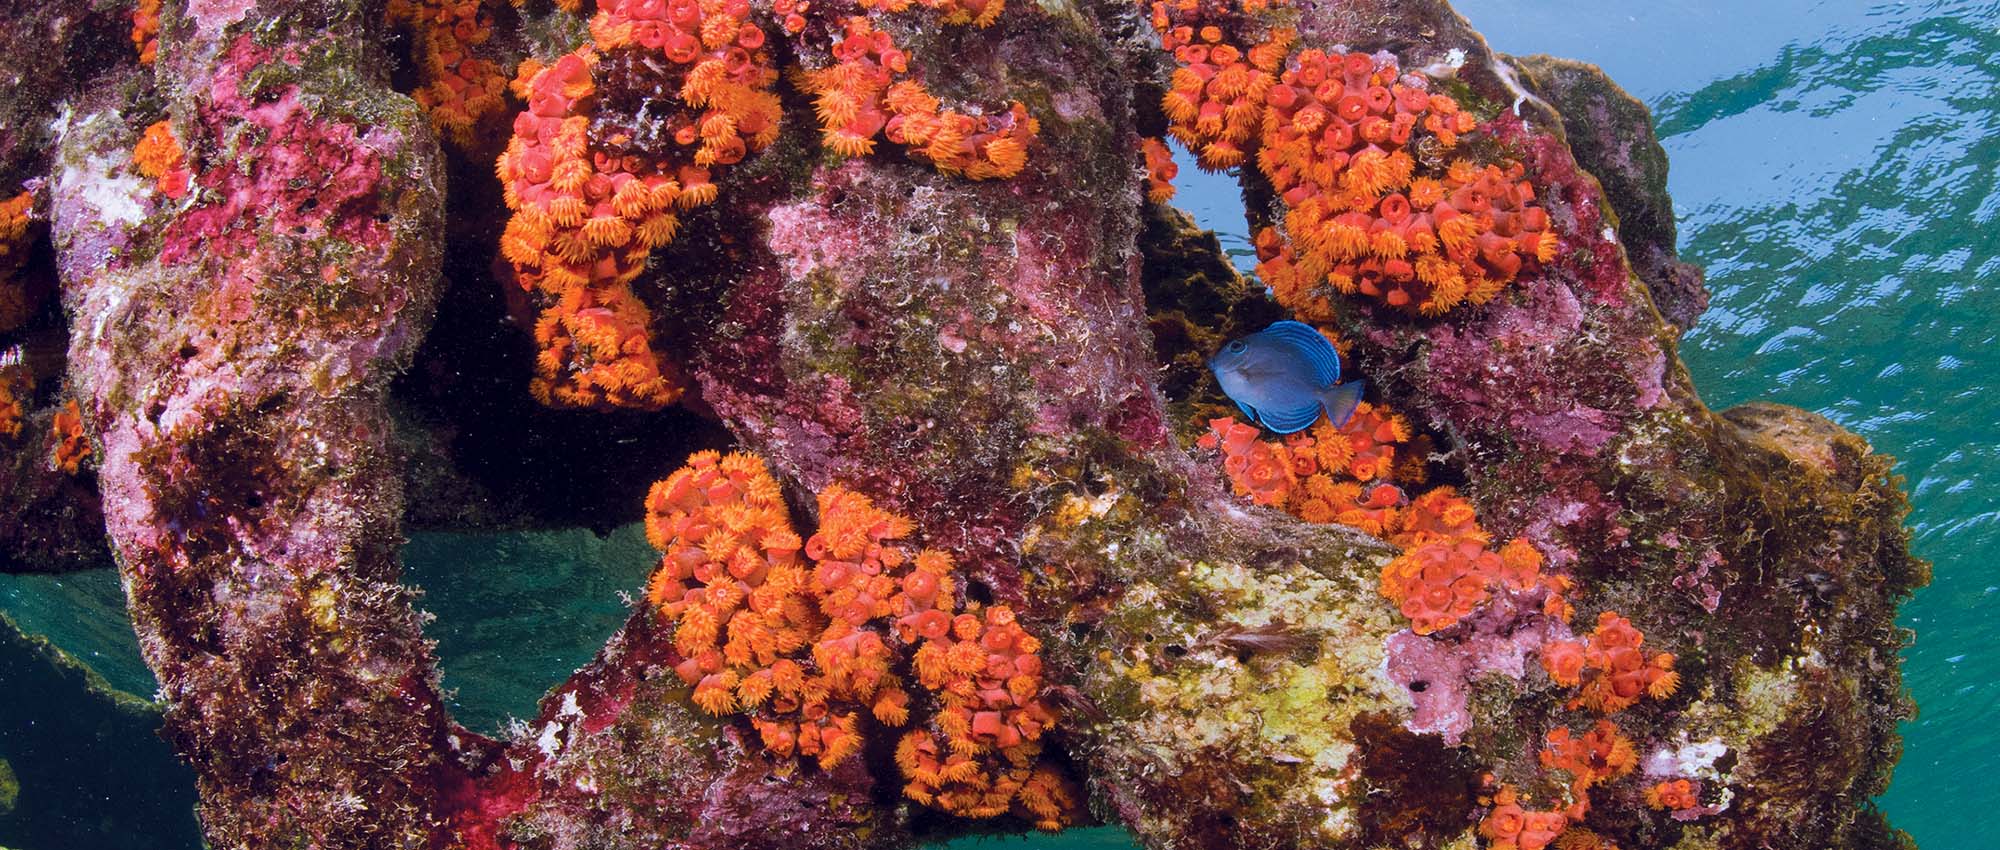 Fish swimming near some coral